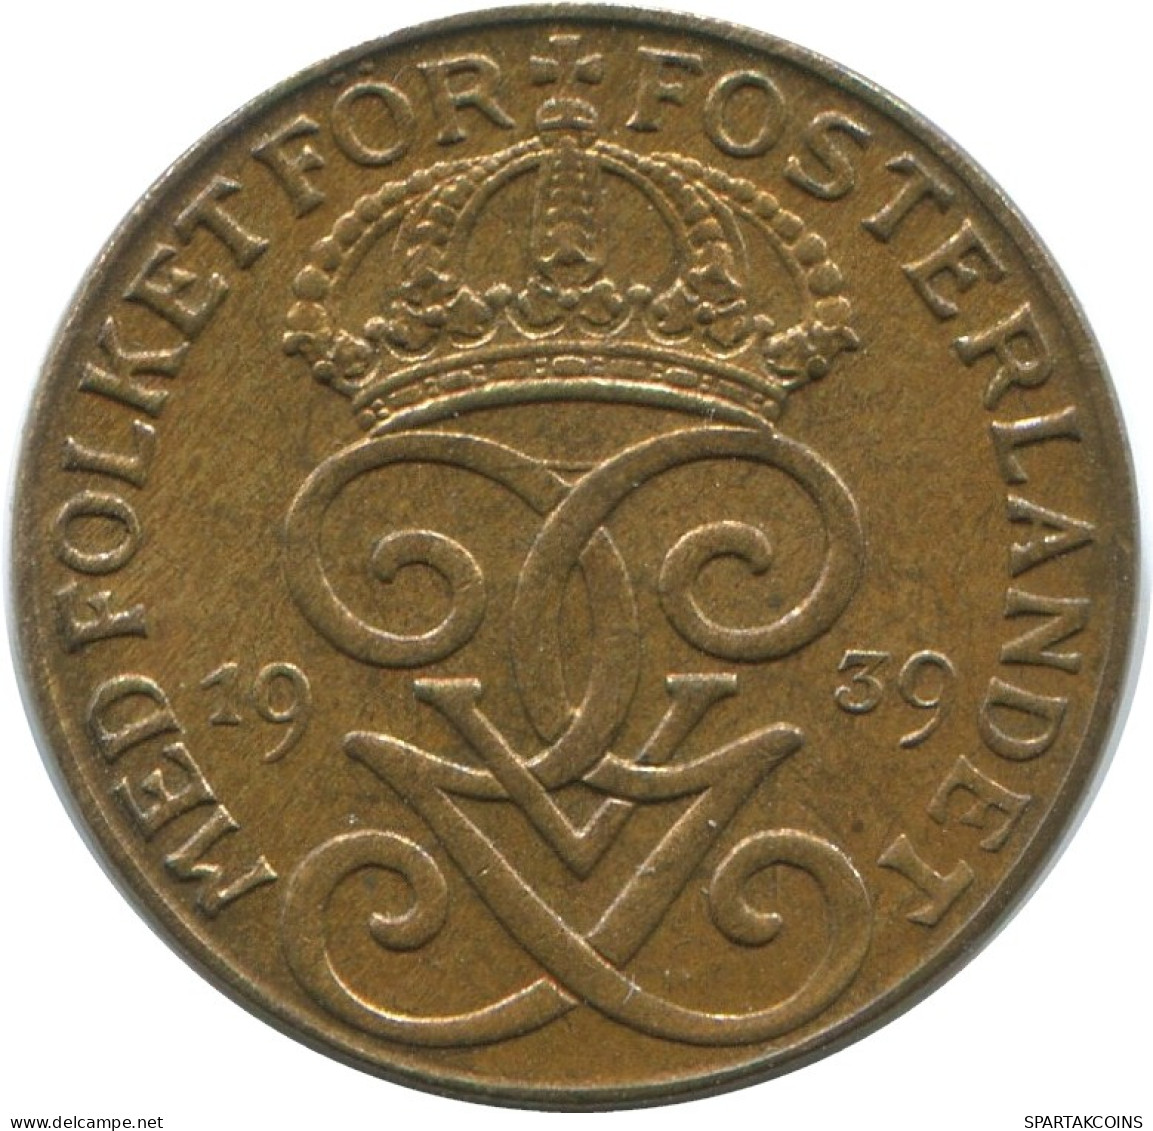 1 ORE 1939 SWEDEN Coin #AD426.2.U.A - Sweden